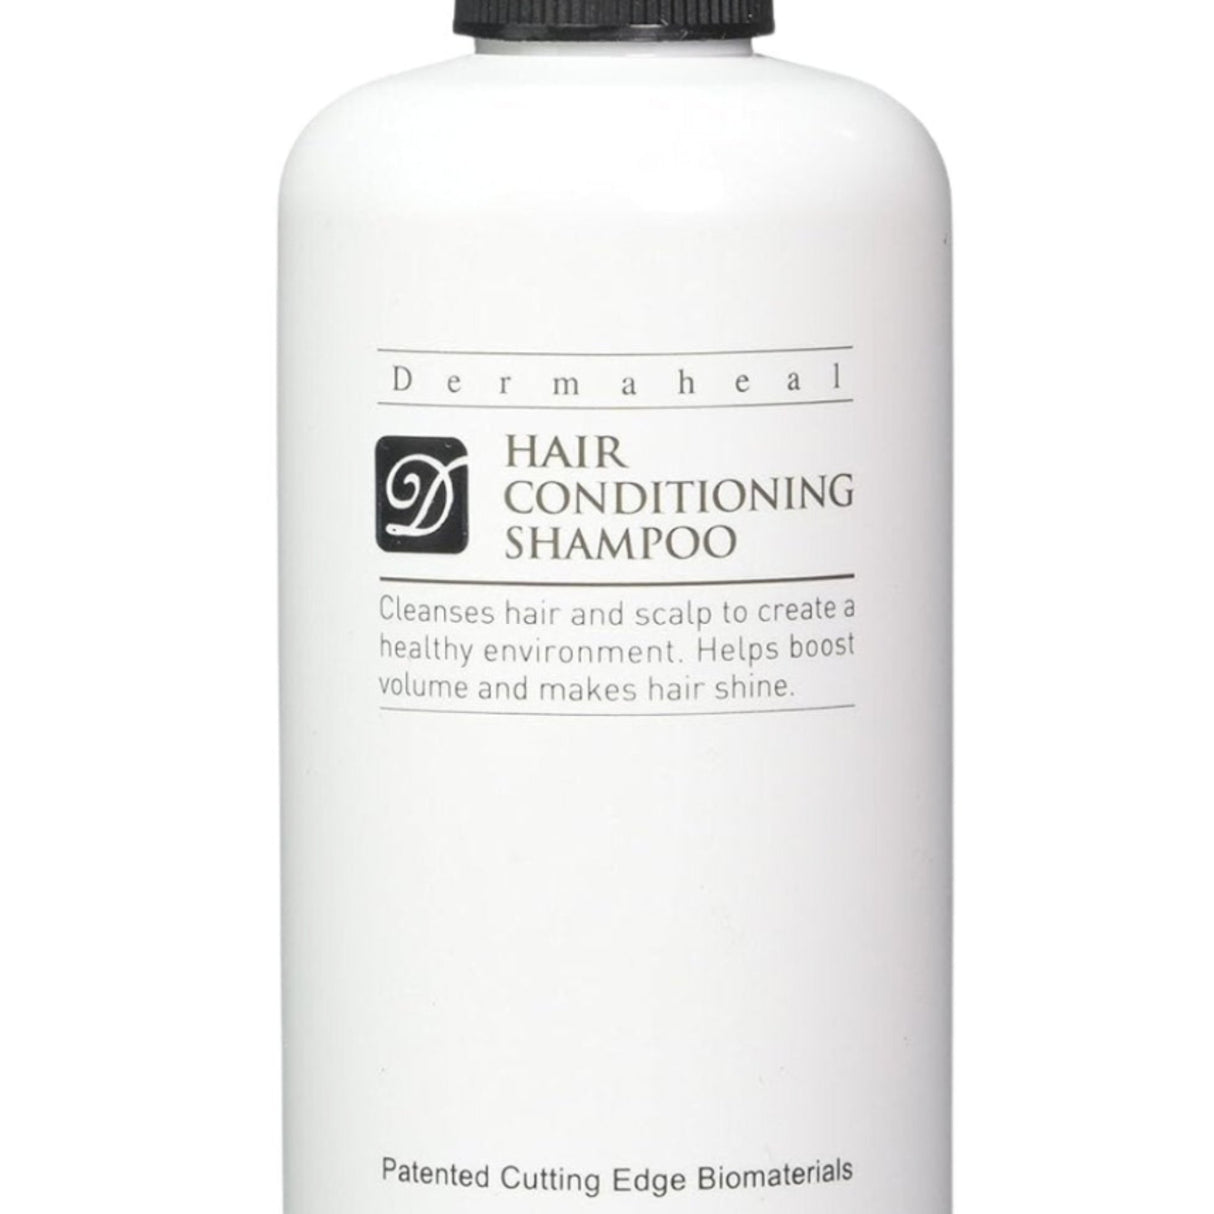 Dermaheal Hair Conditioning Shampoo - Filler Lux™ - Shampoos & Hair - Caregen LTD